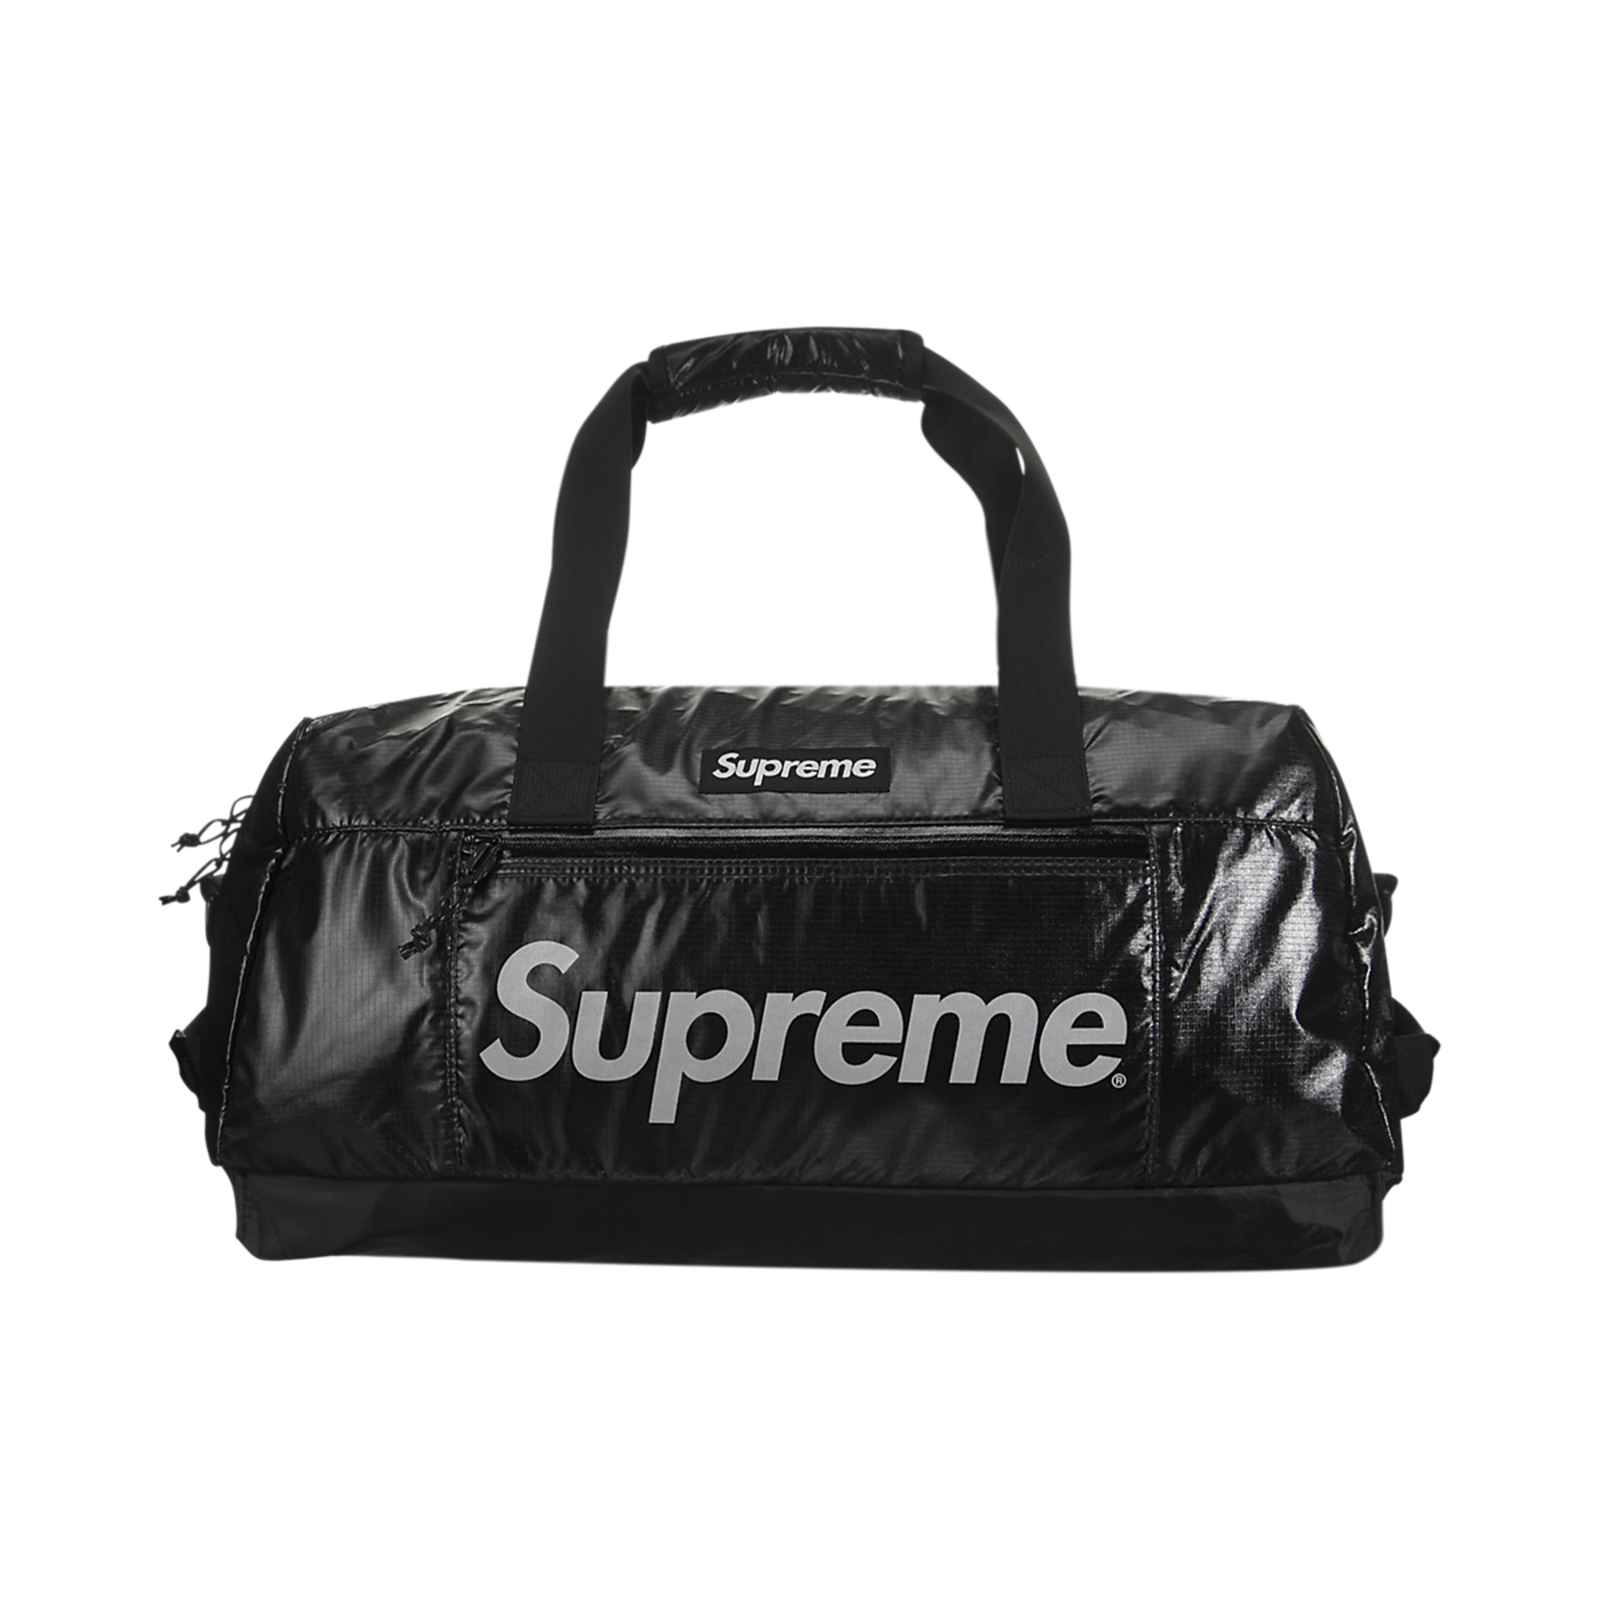 Supreme Duffle Bag - fw17b17 - Sneakerhead.com – SNEAKERHEAD.com